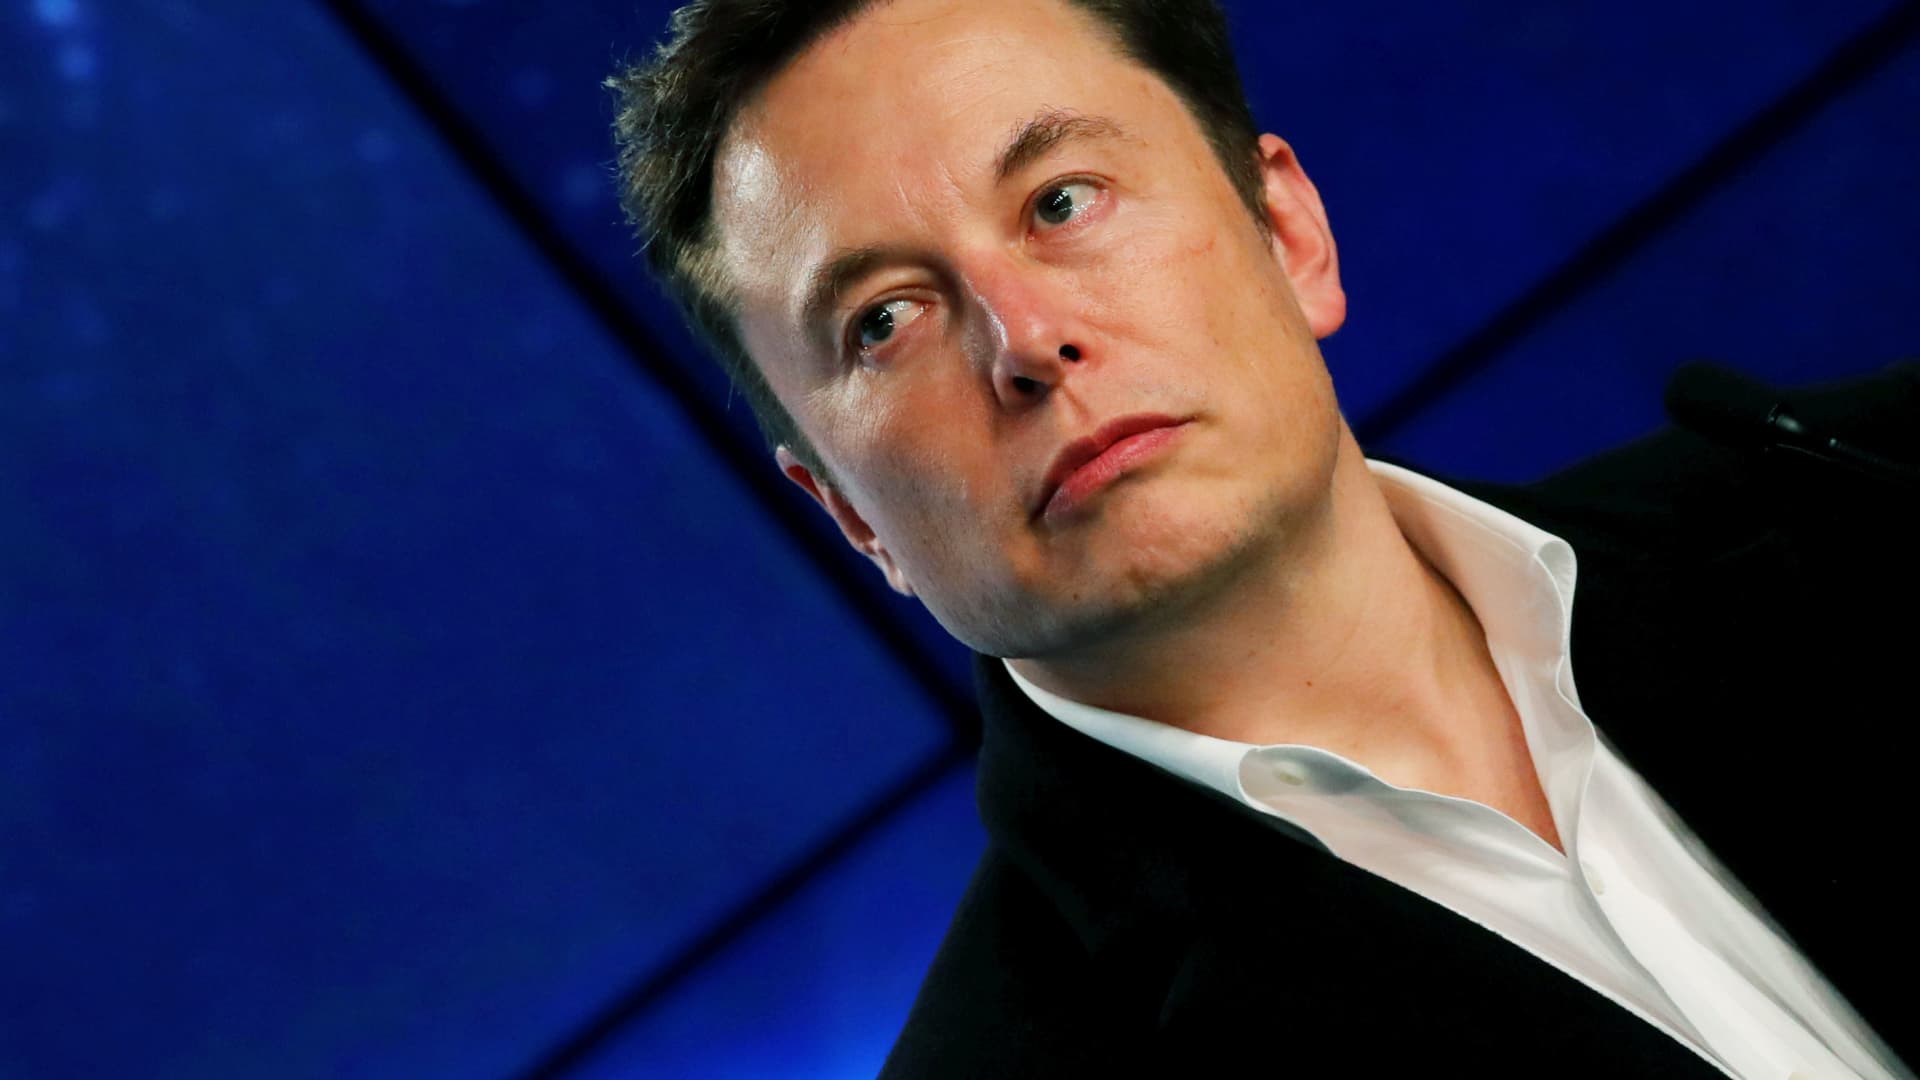 Tesla stock had its worst week since March 2020 amid wild week for Musk